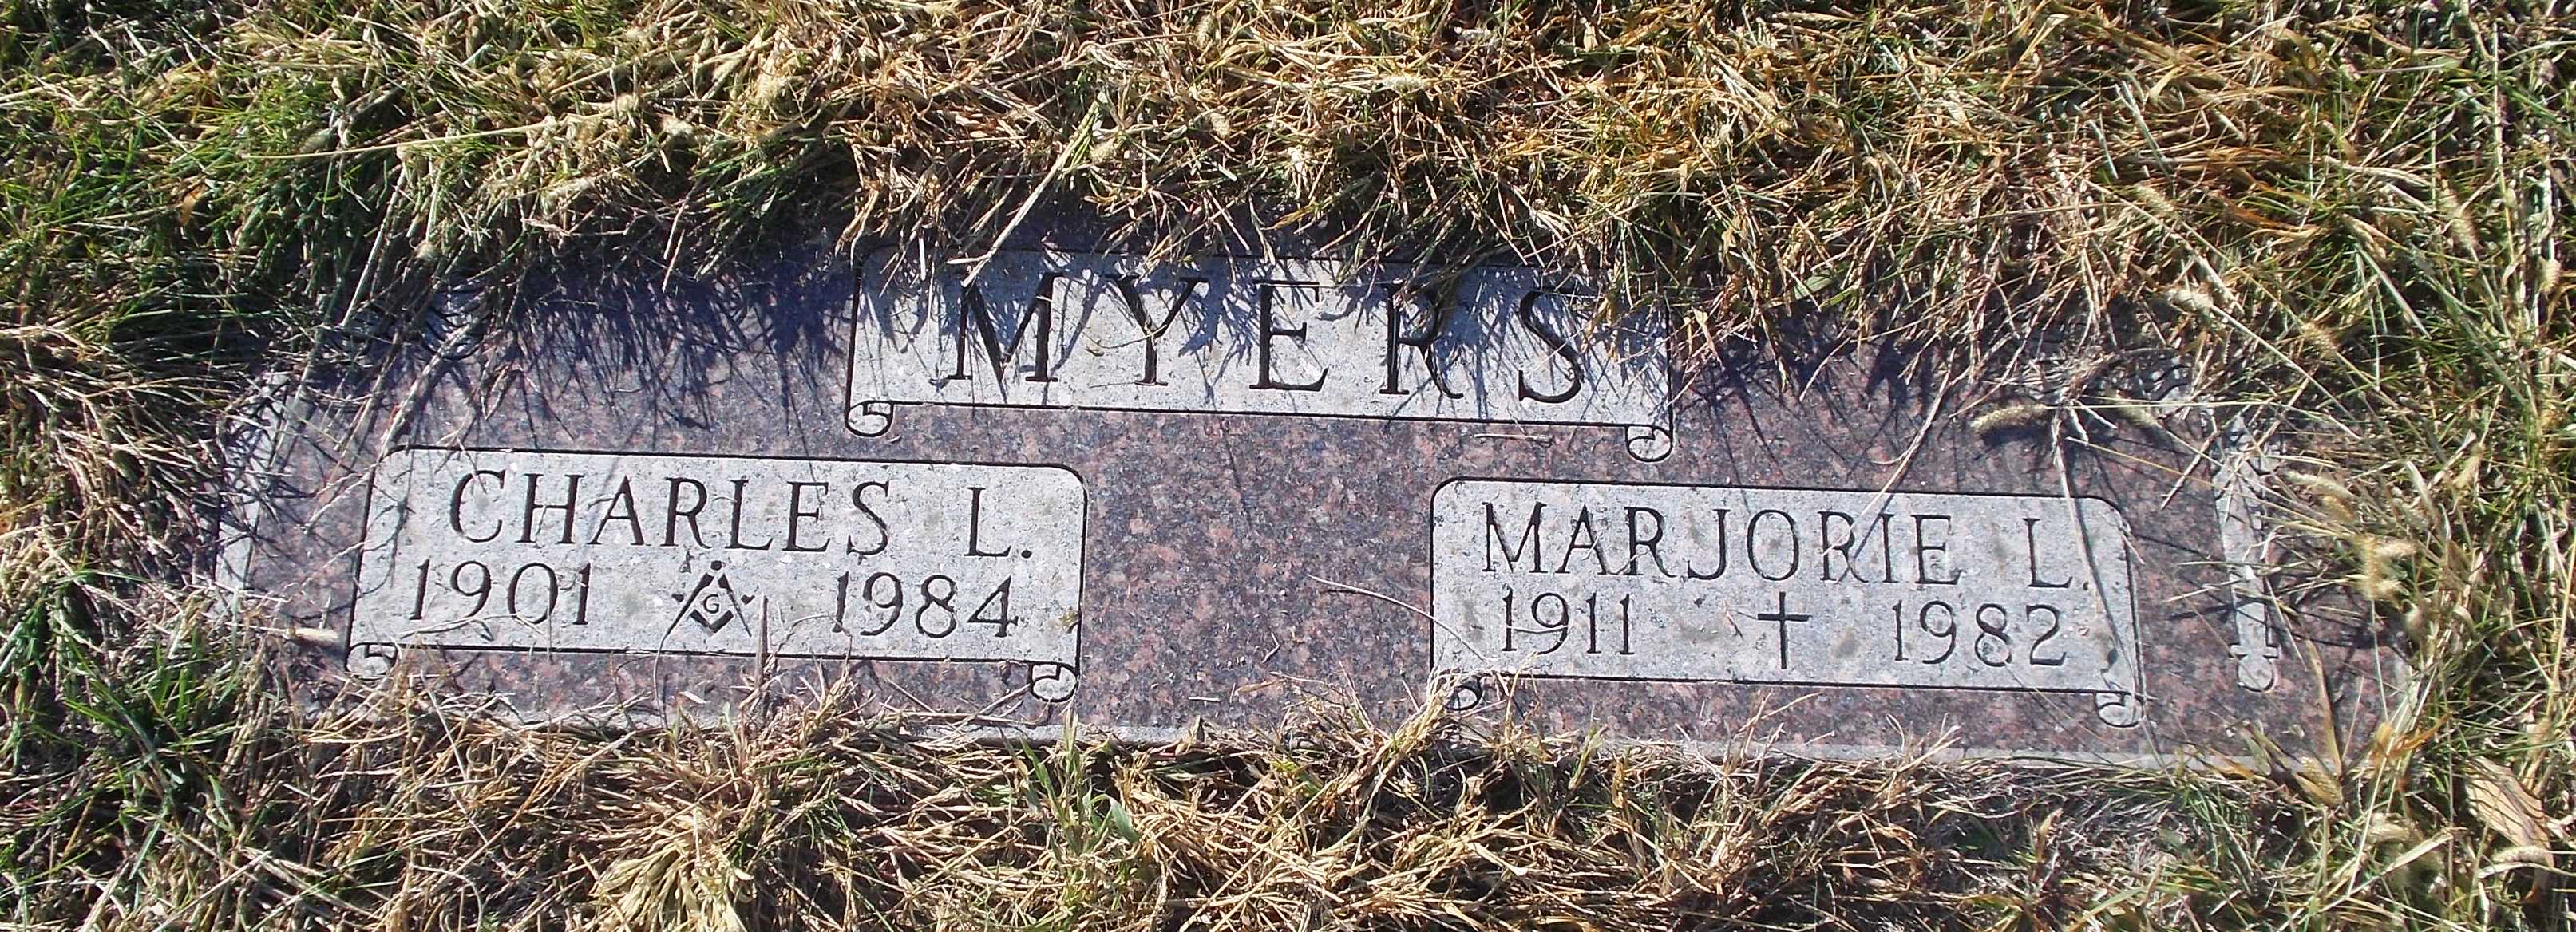 Charles L Myers